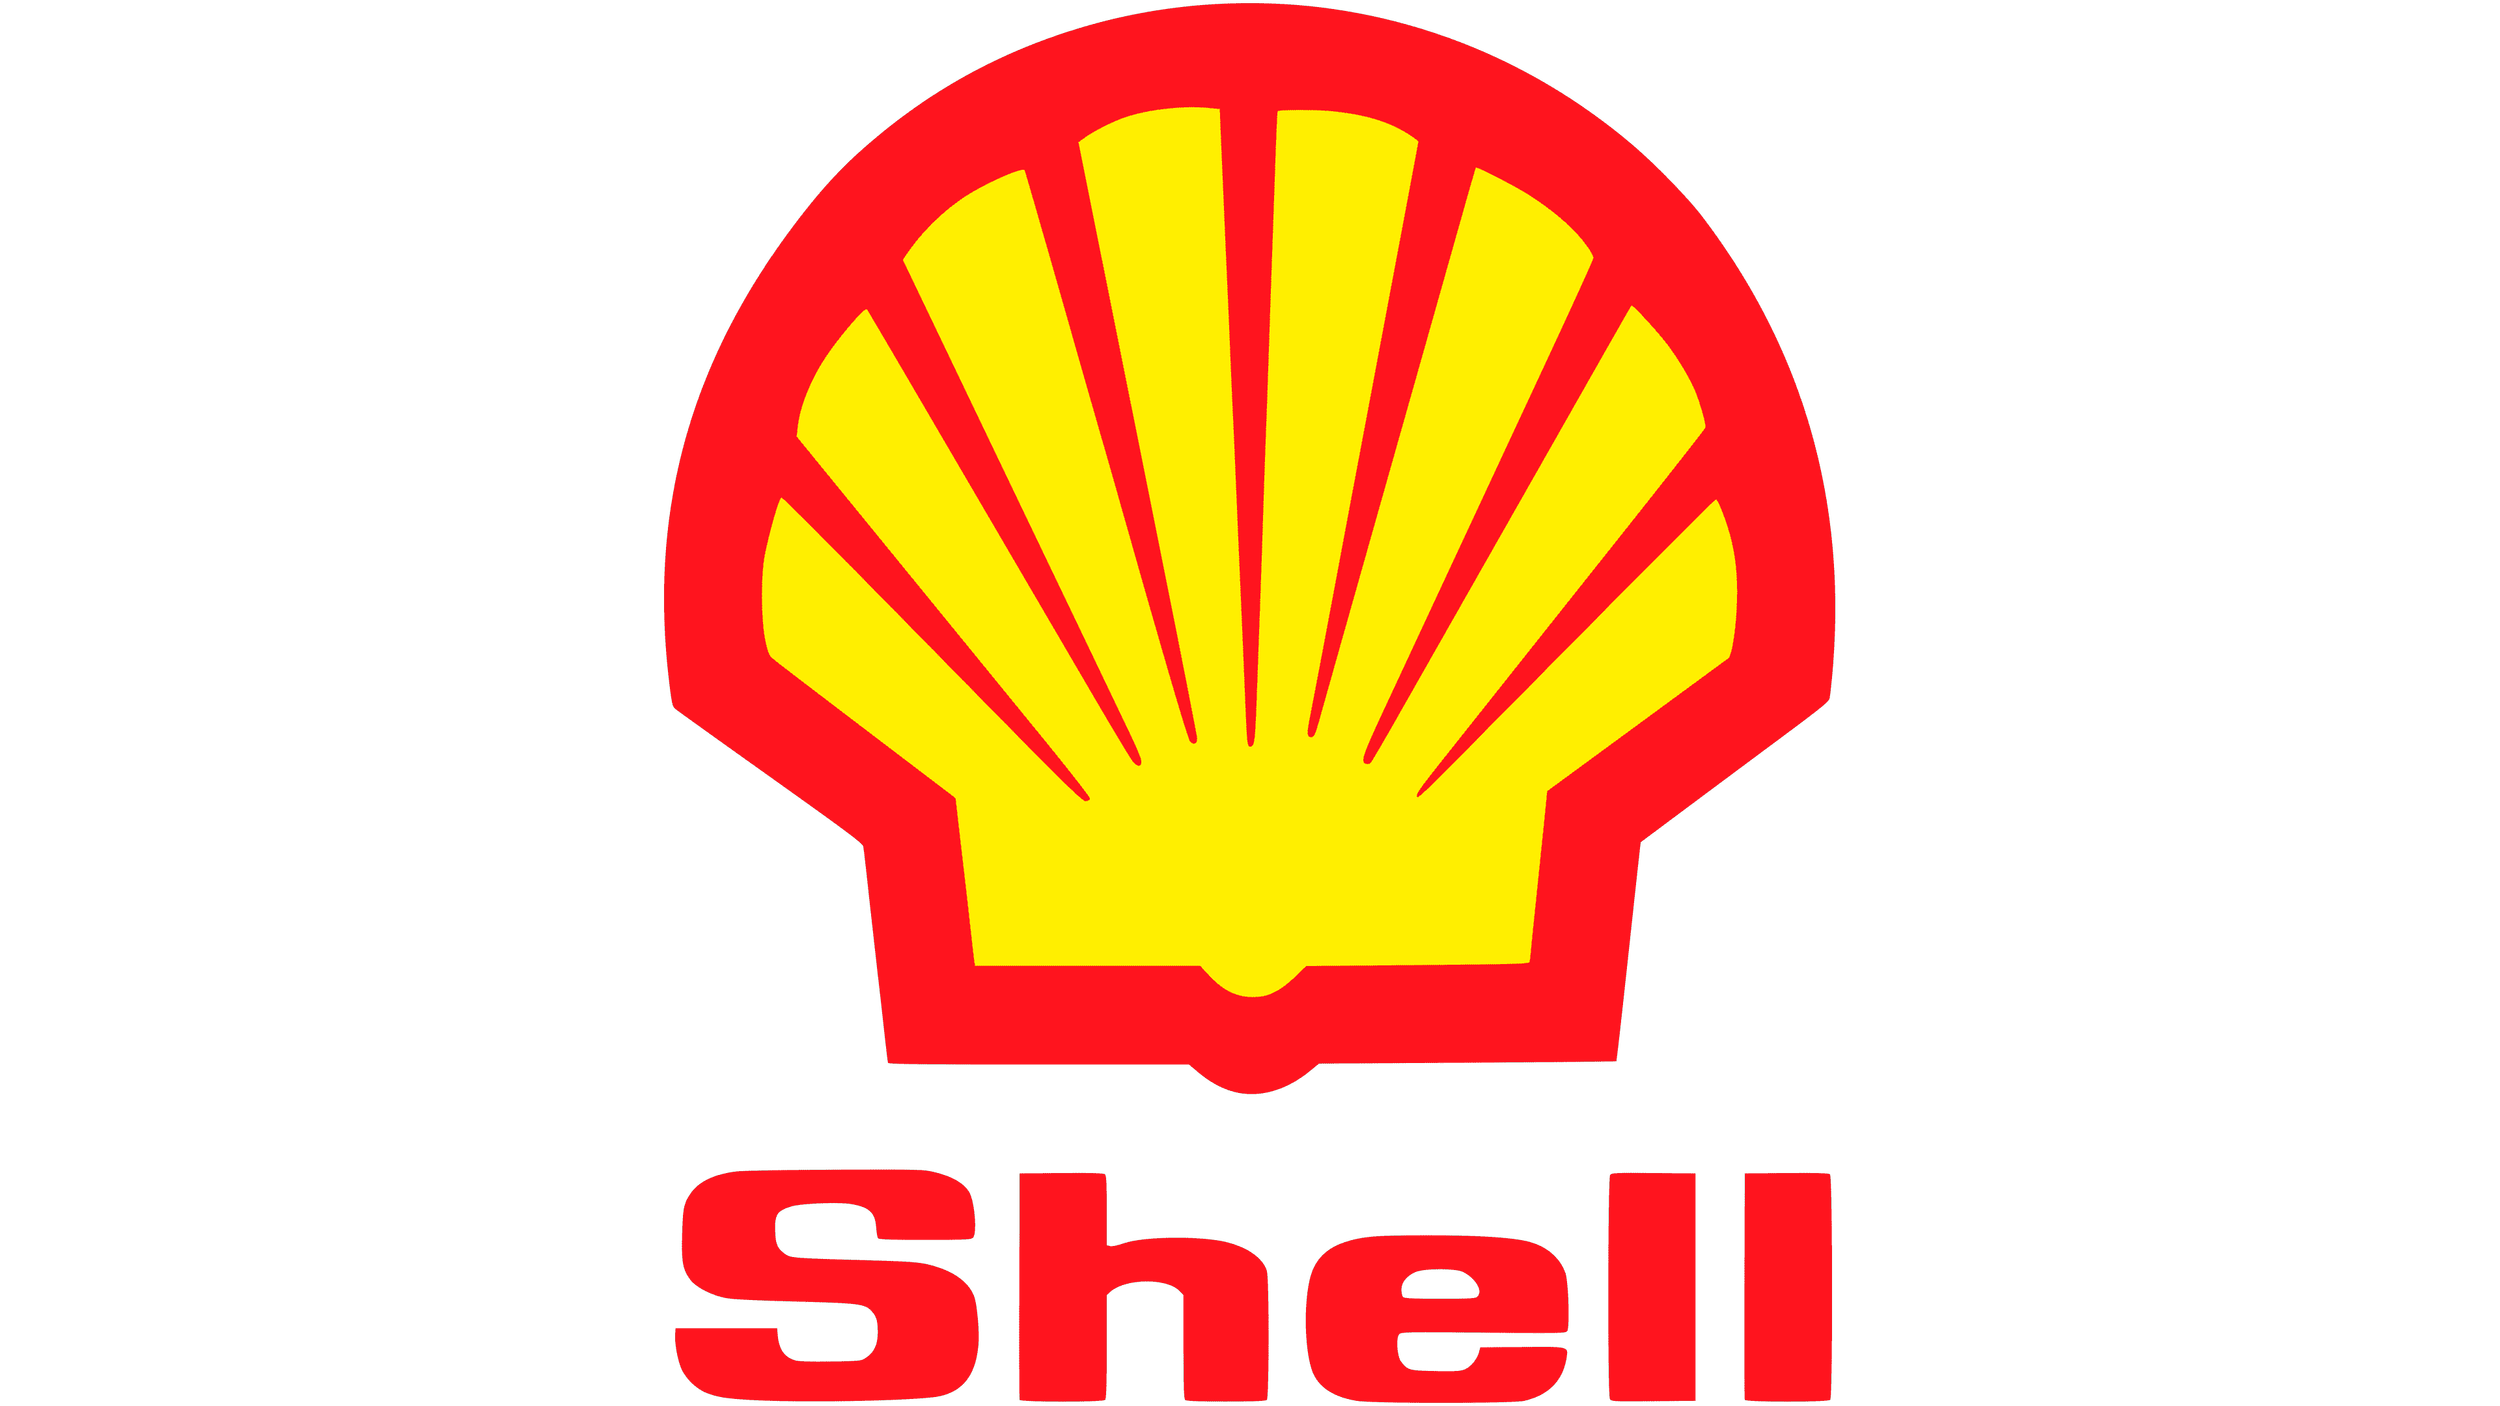 Shell-Logo-1971-1995.png